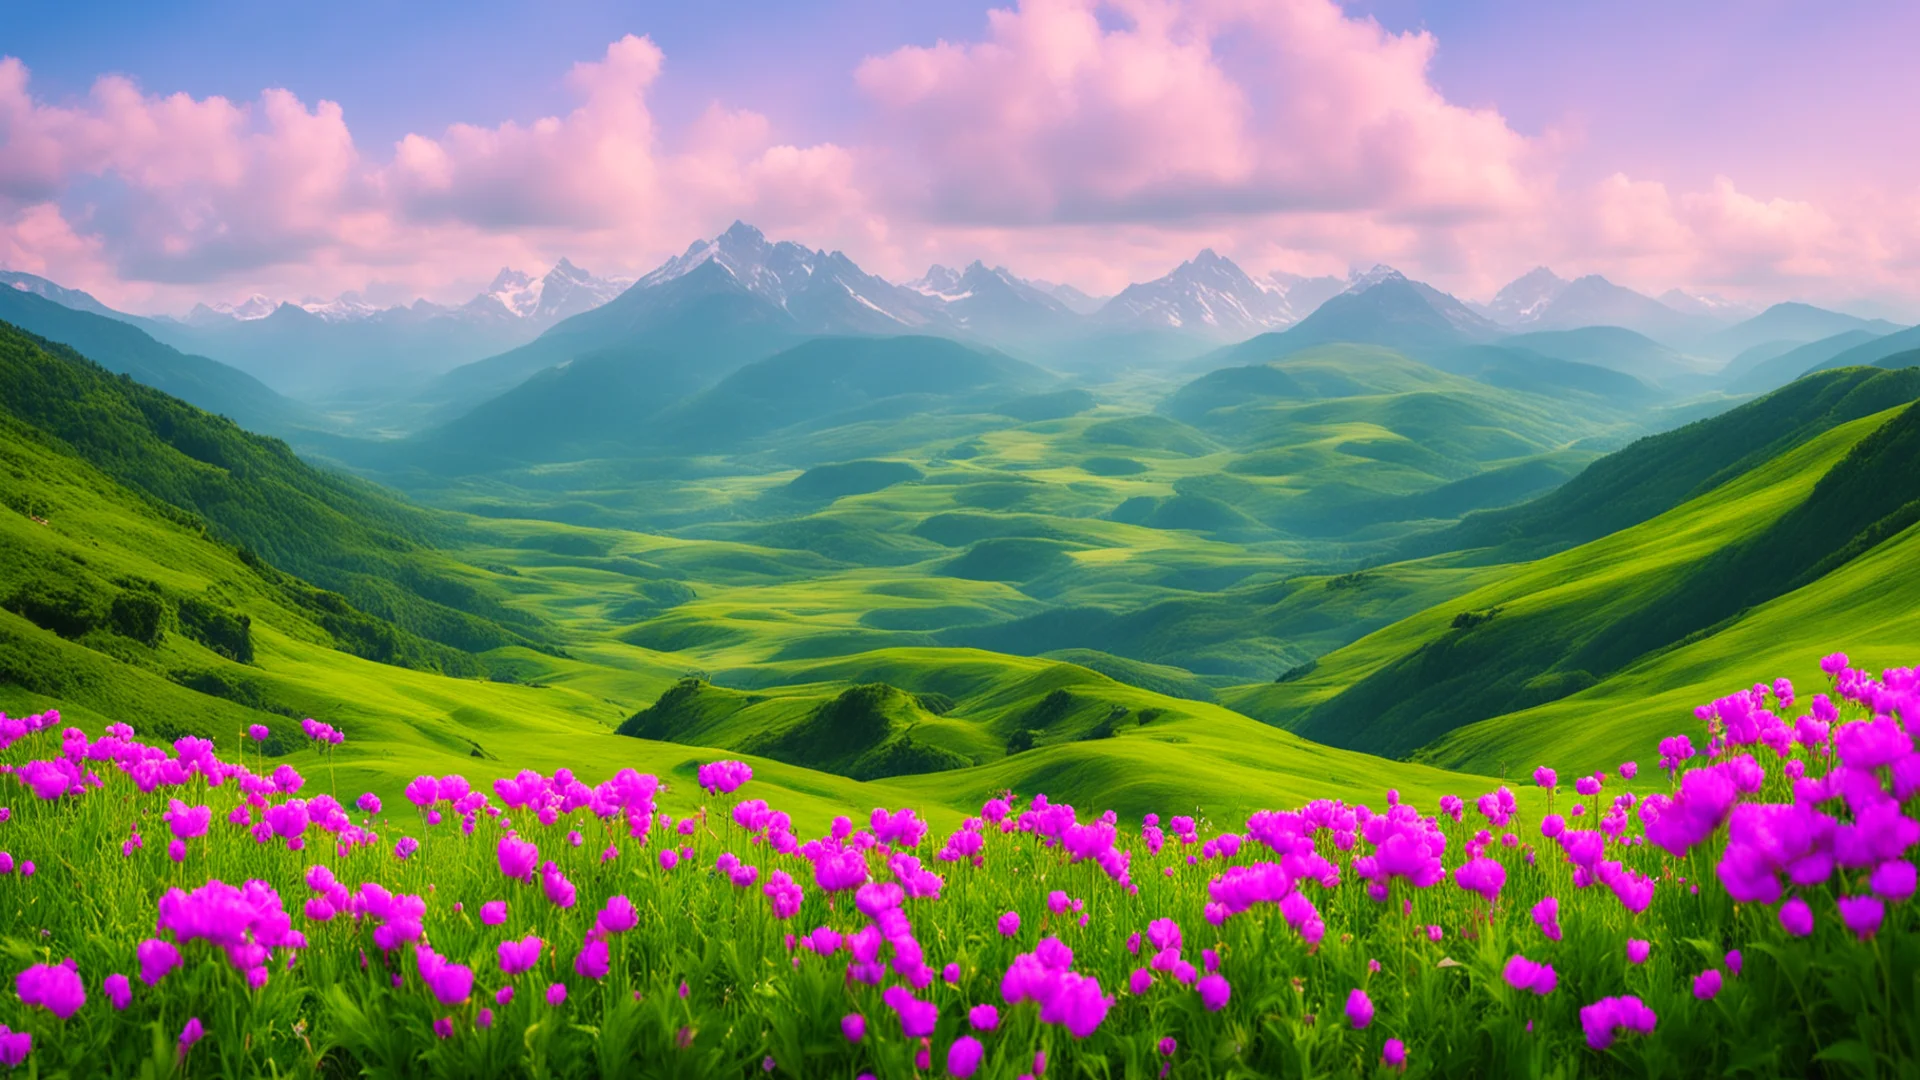 beautiful scenery amazing land peaceful lowfi flowers hills wide